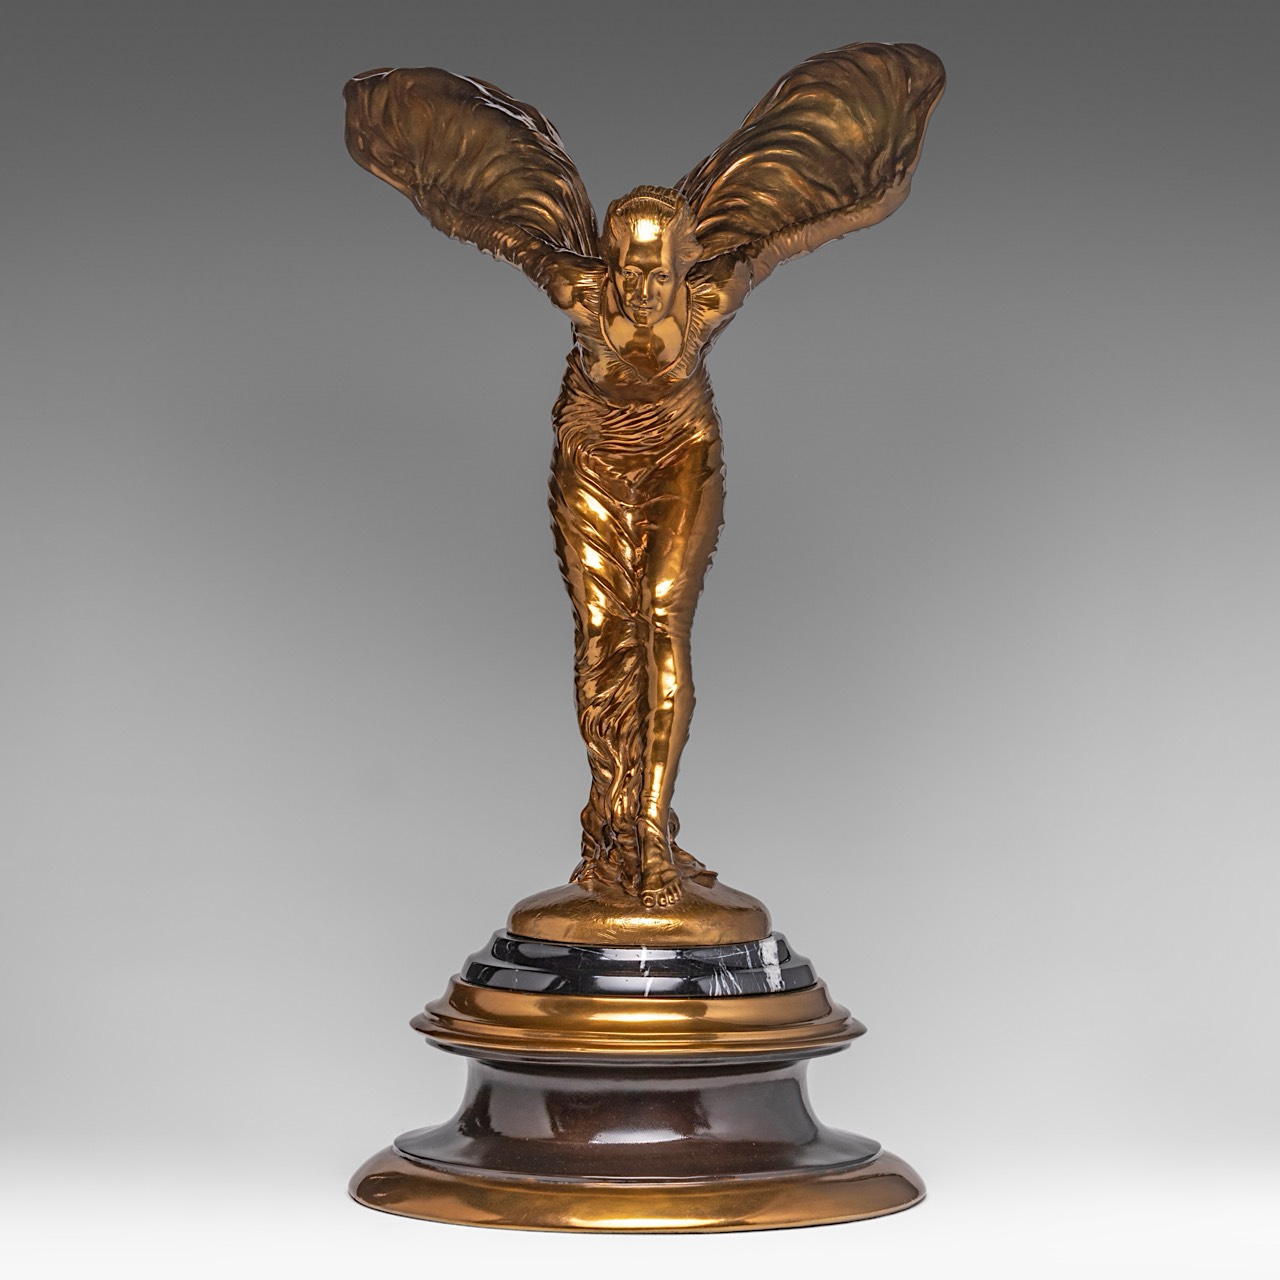 Charles Sykes (1875-1950), gilt bronze sculpture of the 'Spirit of Ecstasy', Rolls-Royce, H 69 cm - Image 2 of 14